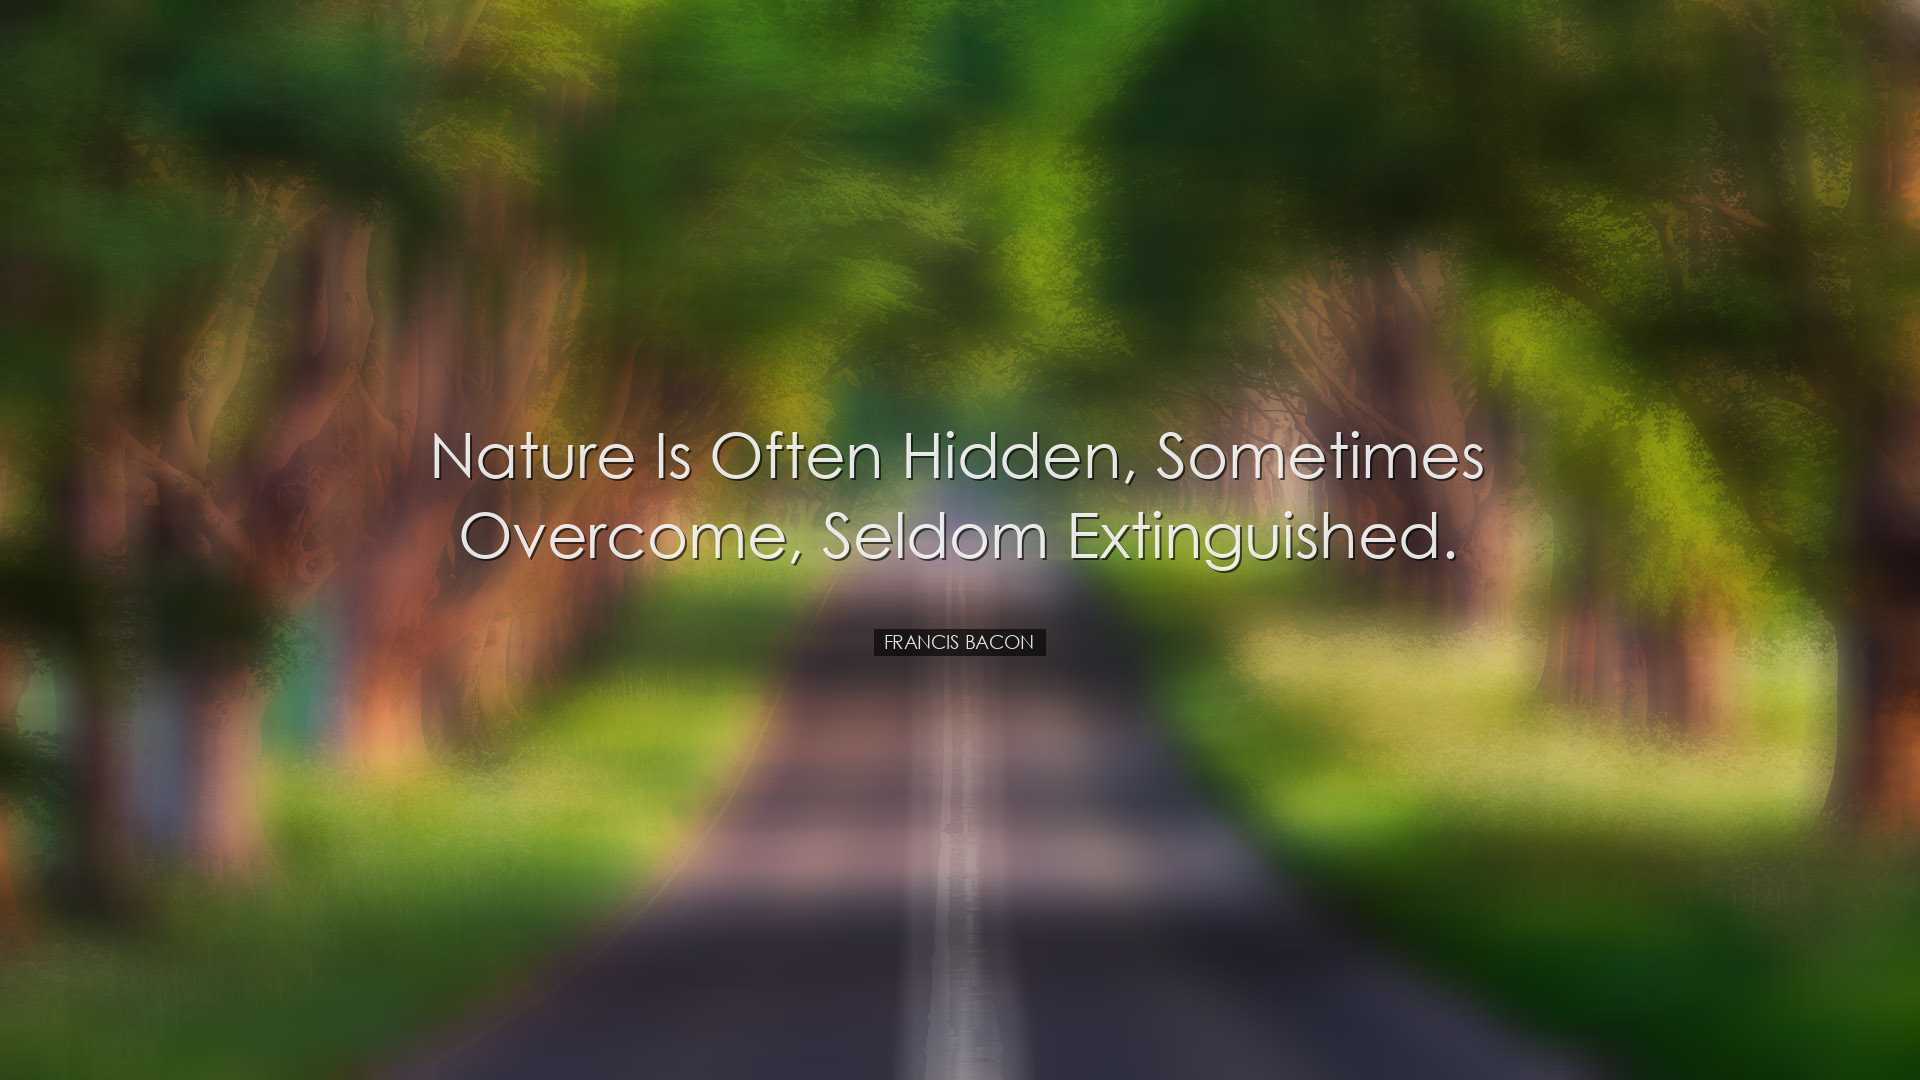 Nature is often hidden, sometimes overcome, seldom extinguished. -